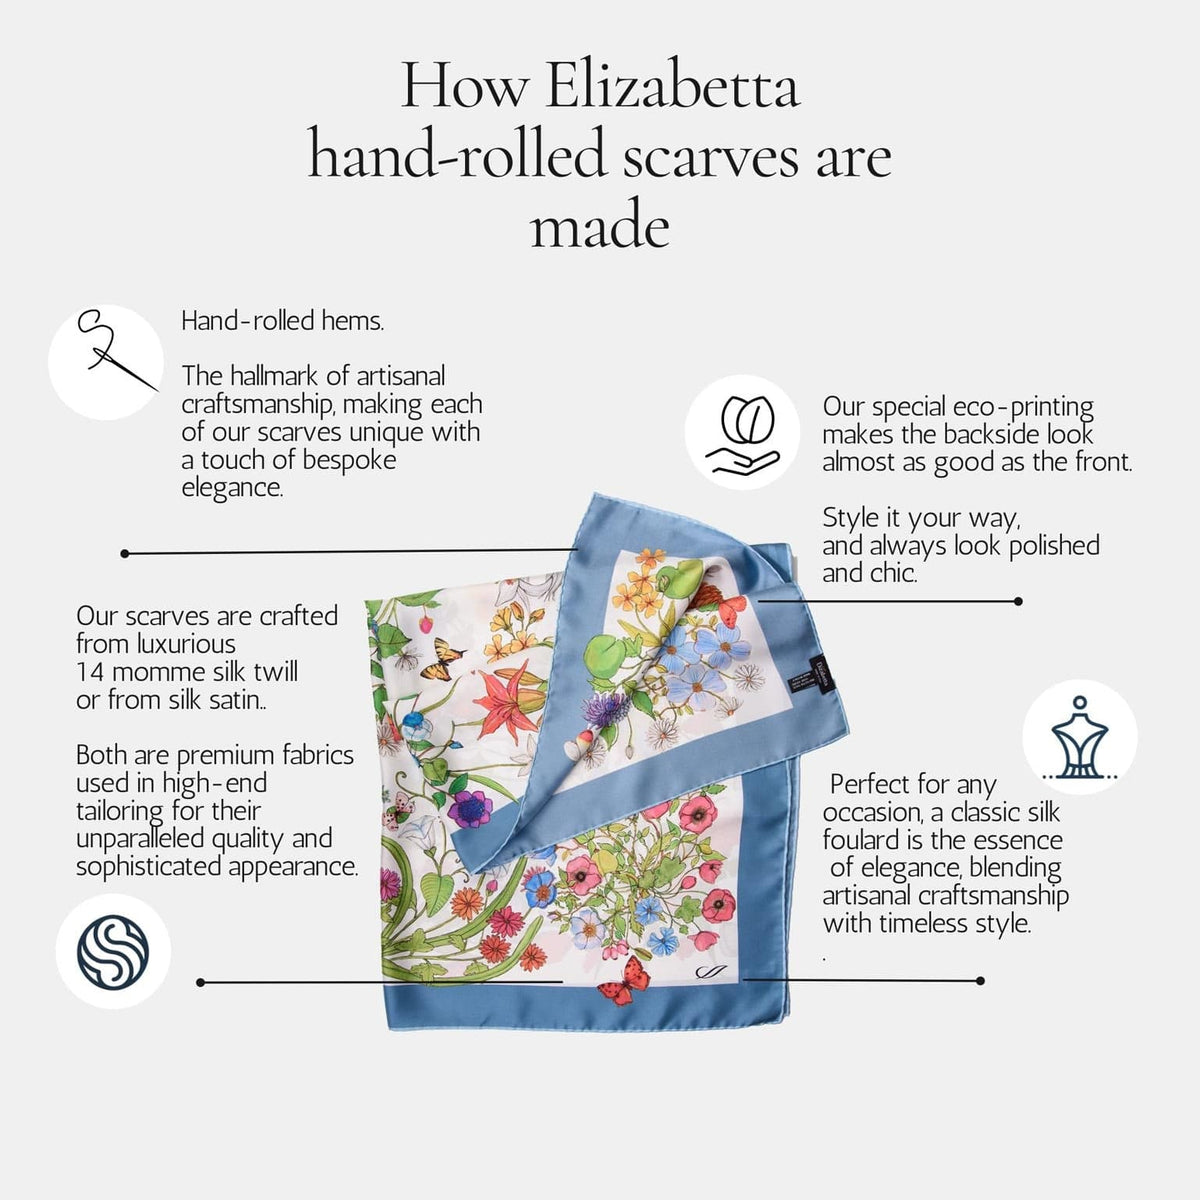 How Elizabetta silk foulards are made